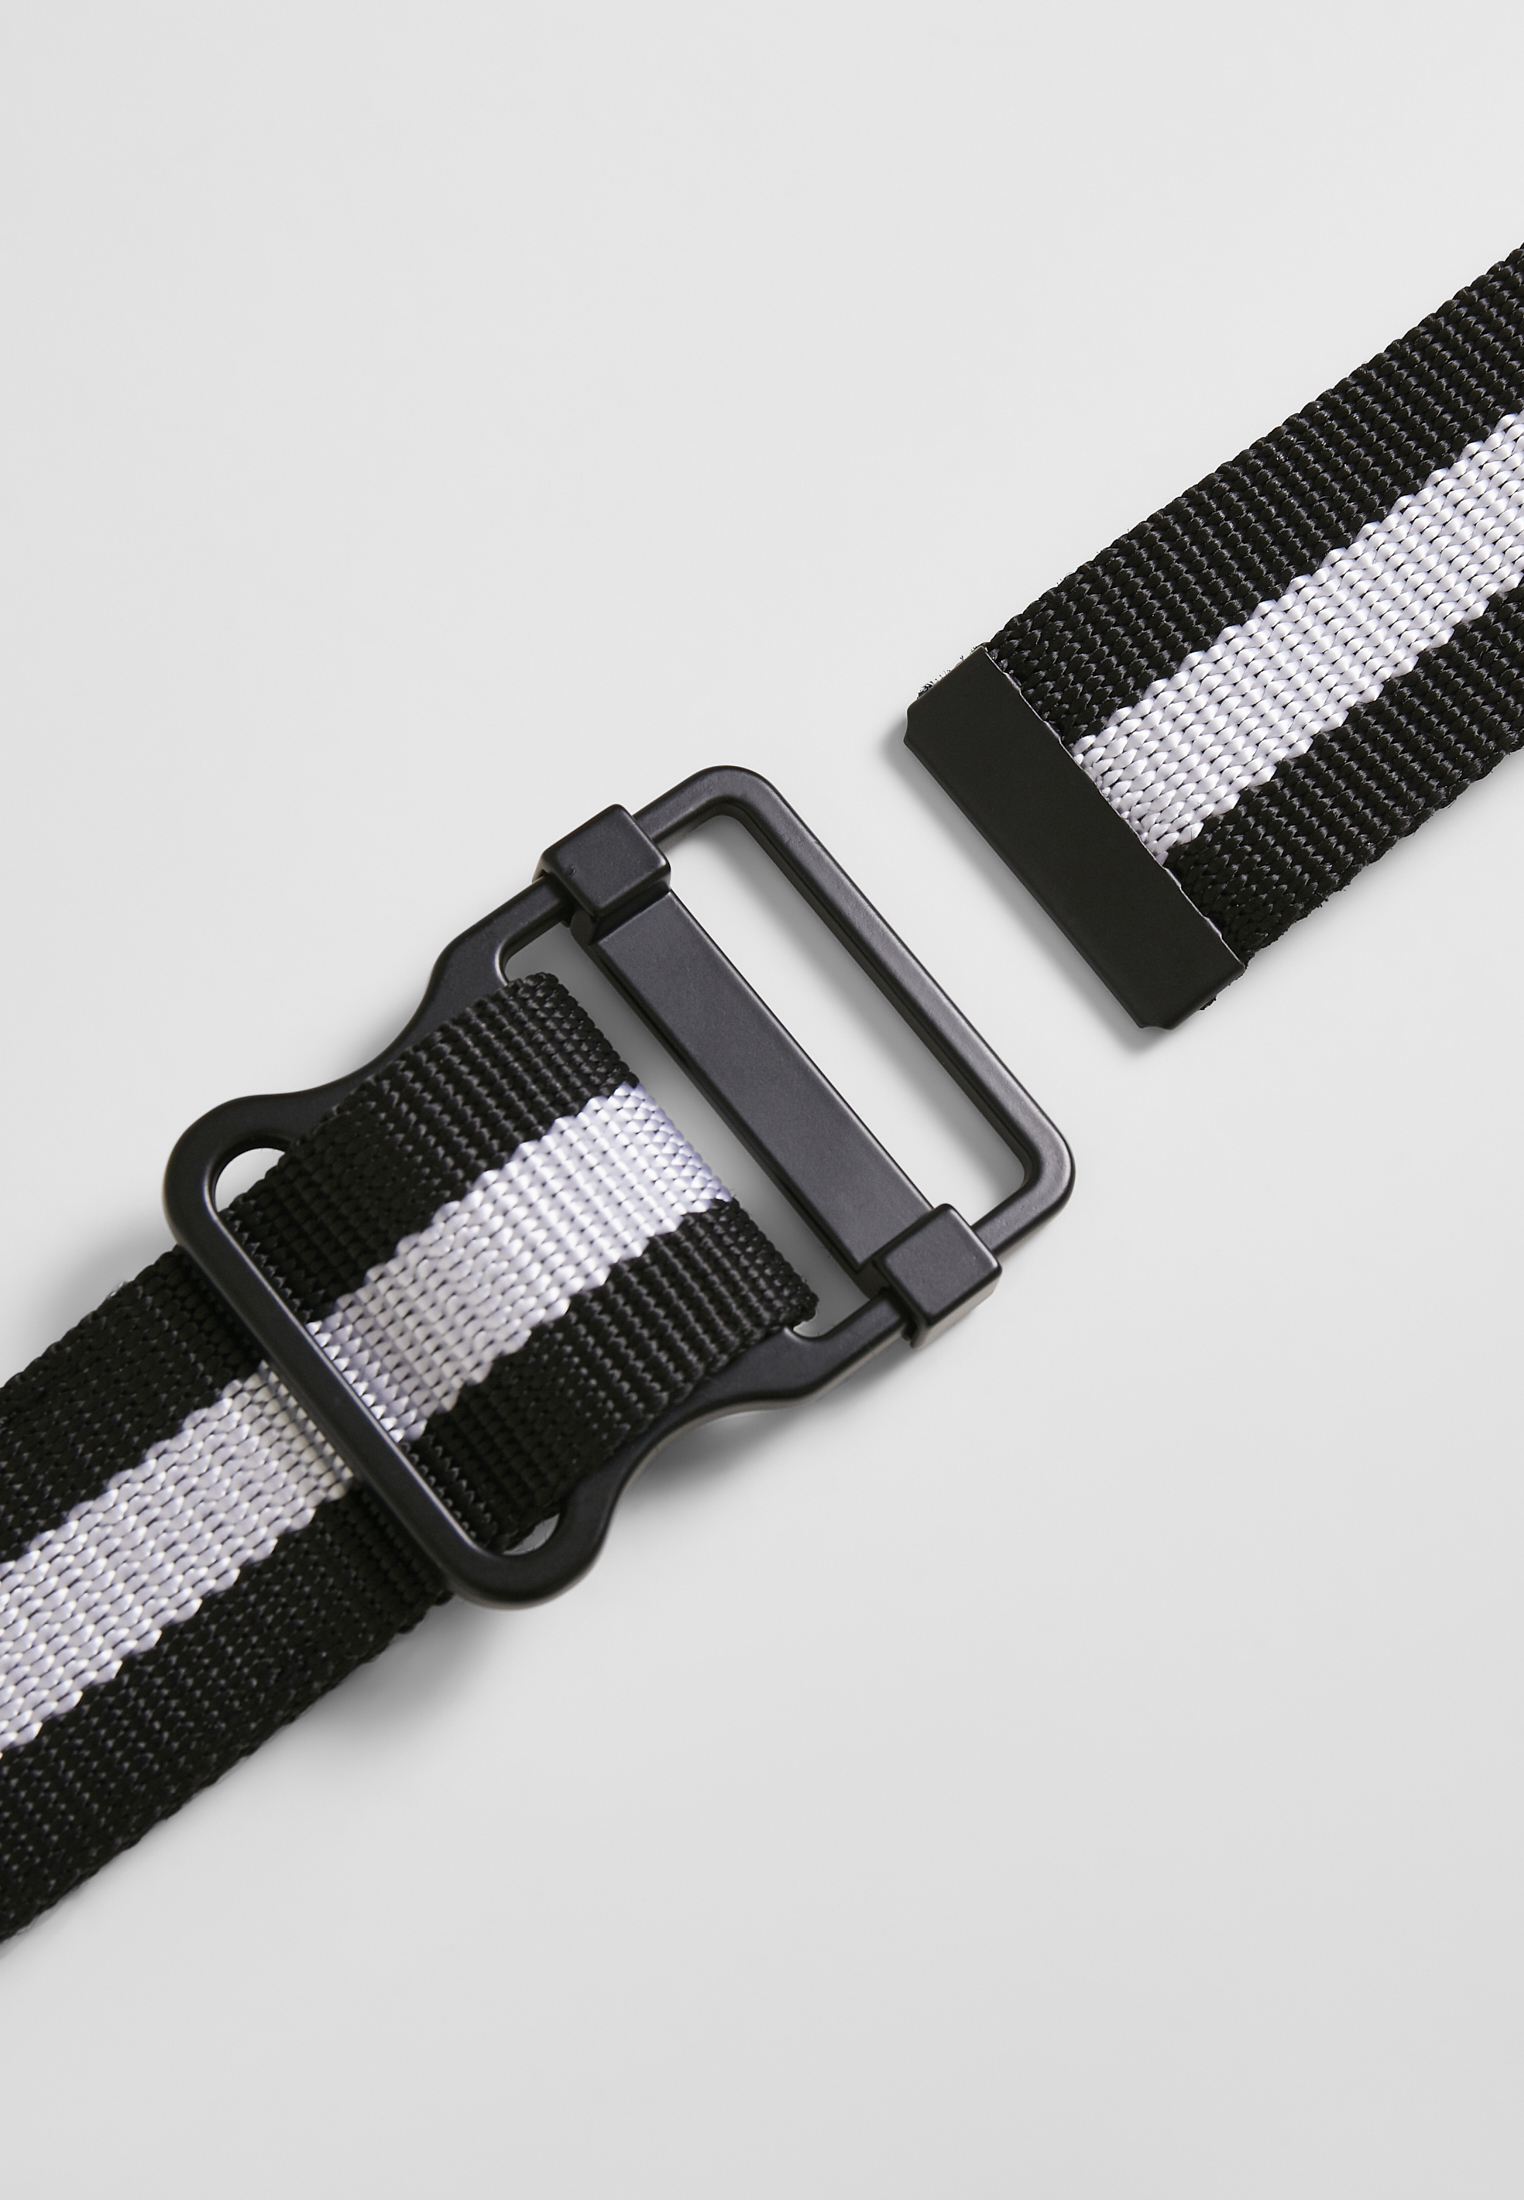 G?rtel Easy Belt with Stripes in Farbe black/white